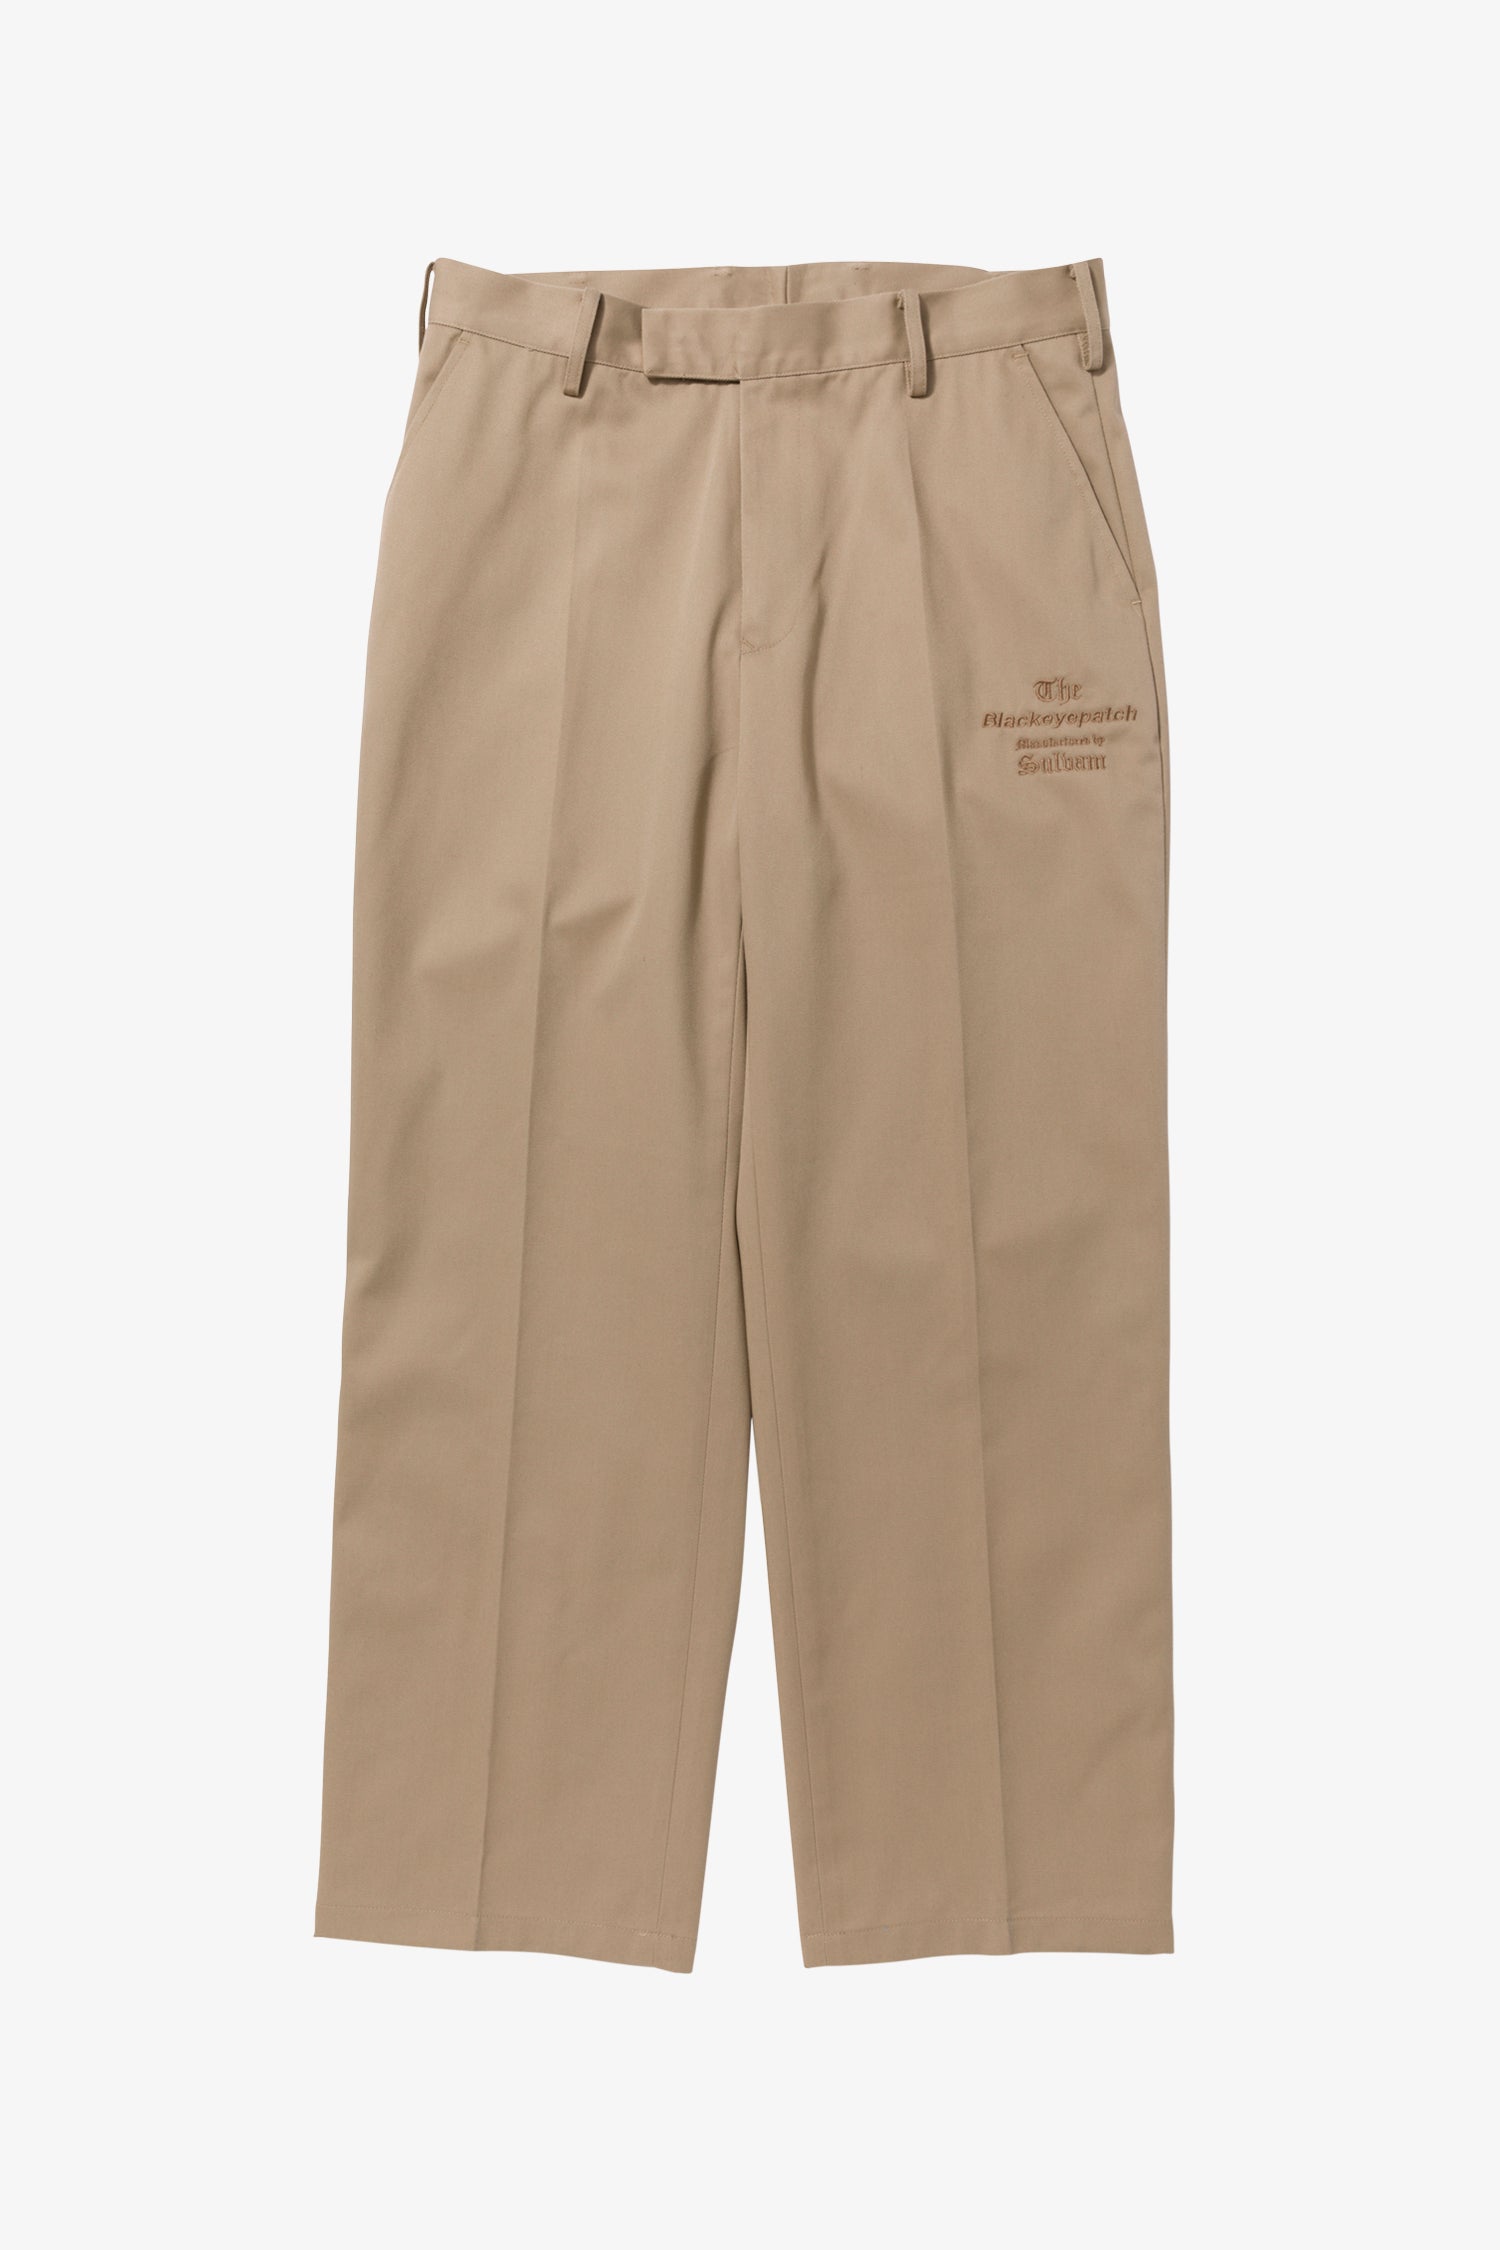 Selectshop FRAME - BLACKEYEPATCH Tailored Pants By sulvam Bottoms Dubai